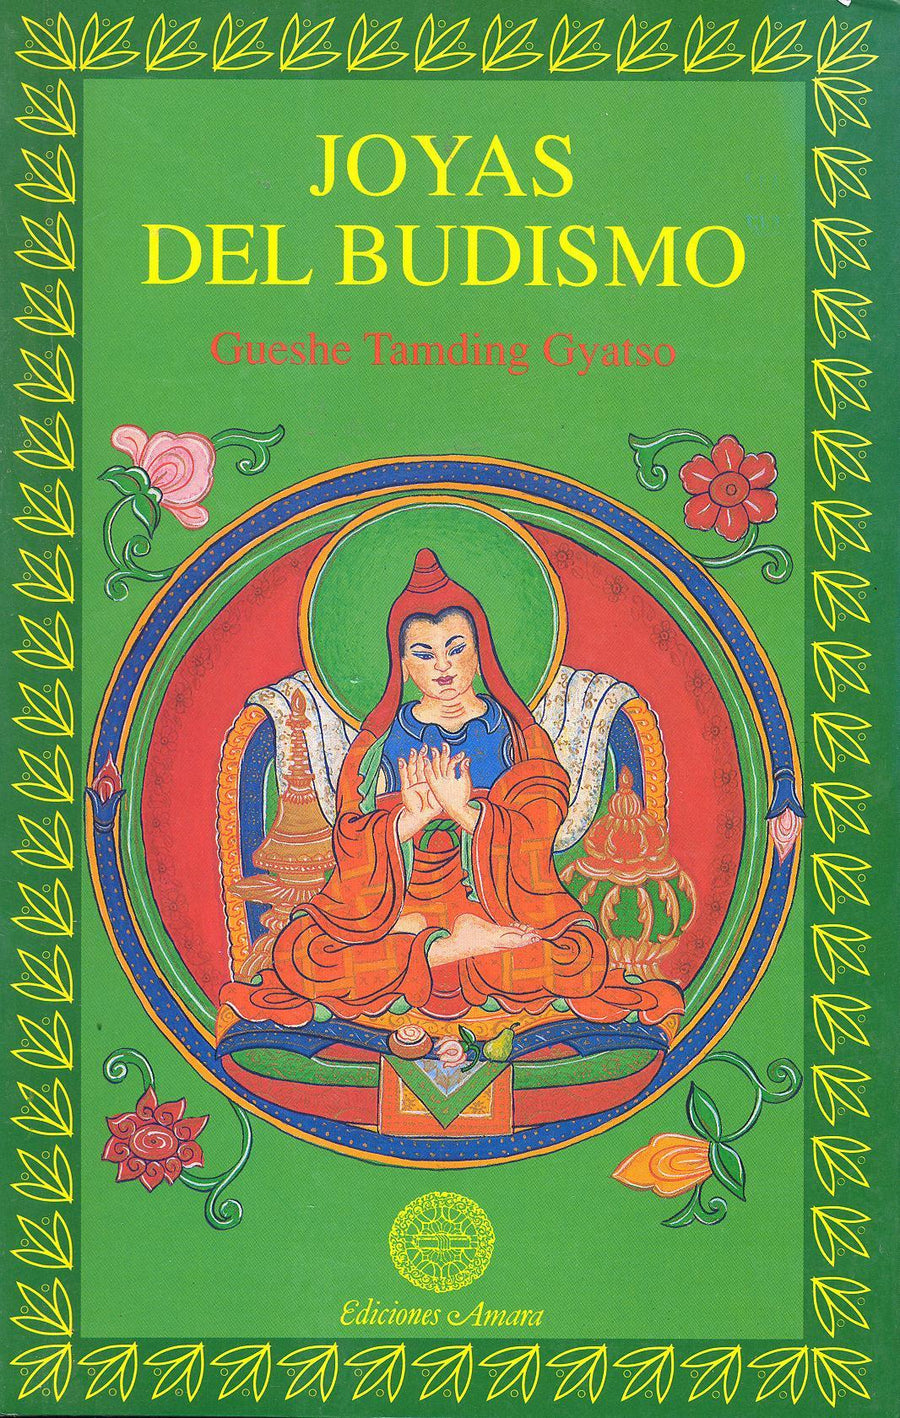 Joyas del Budismo